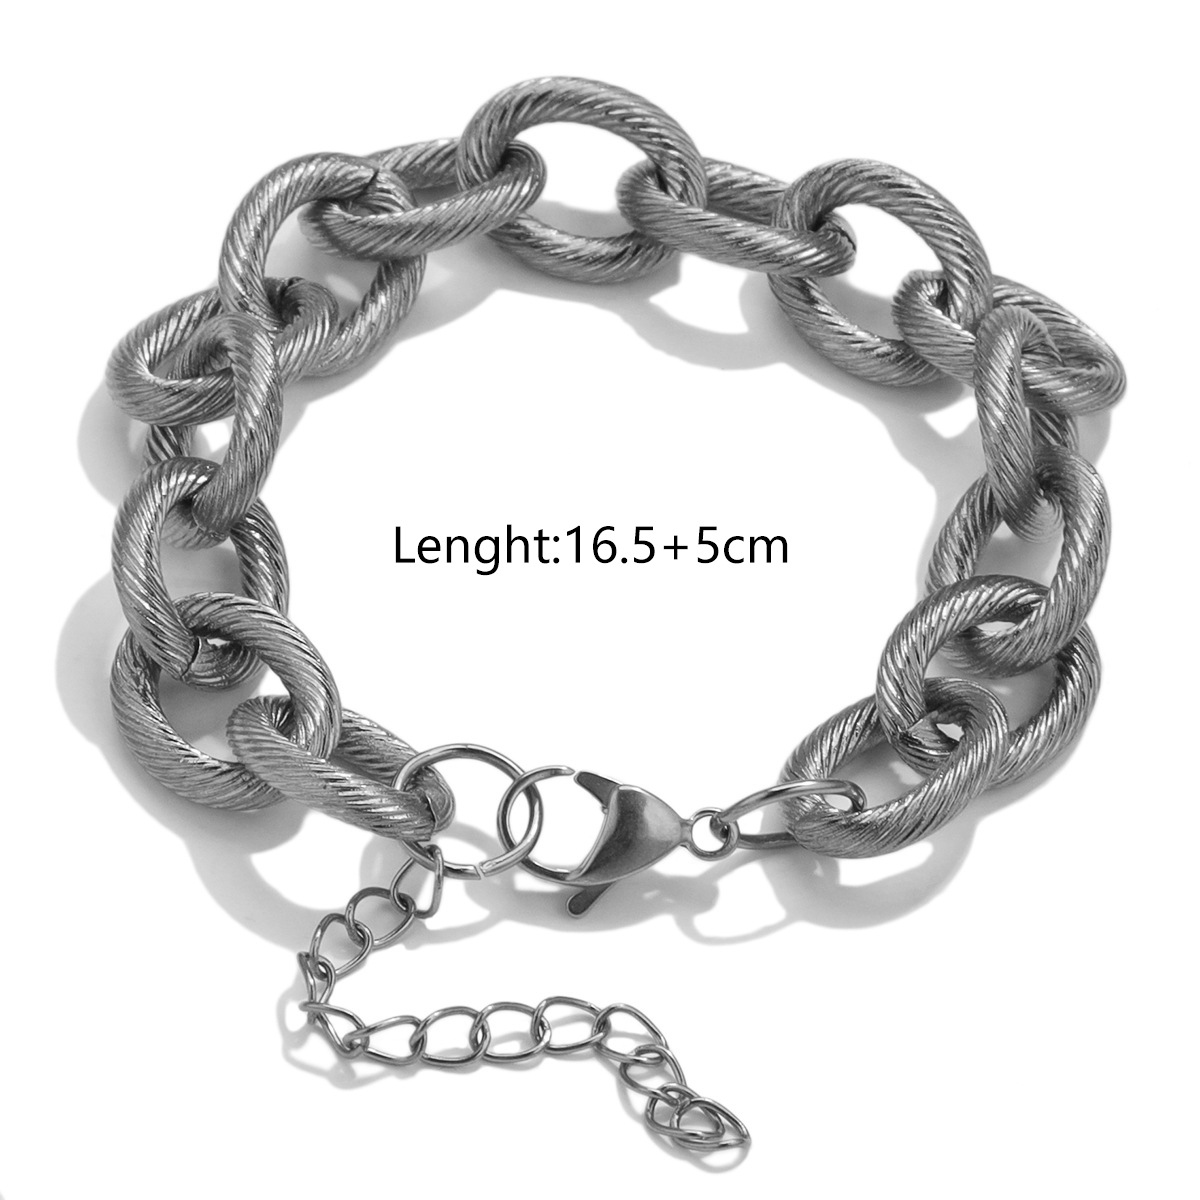 1:Steel bracelet-16cm tail chain 5cm